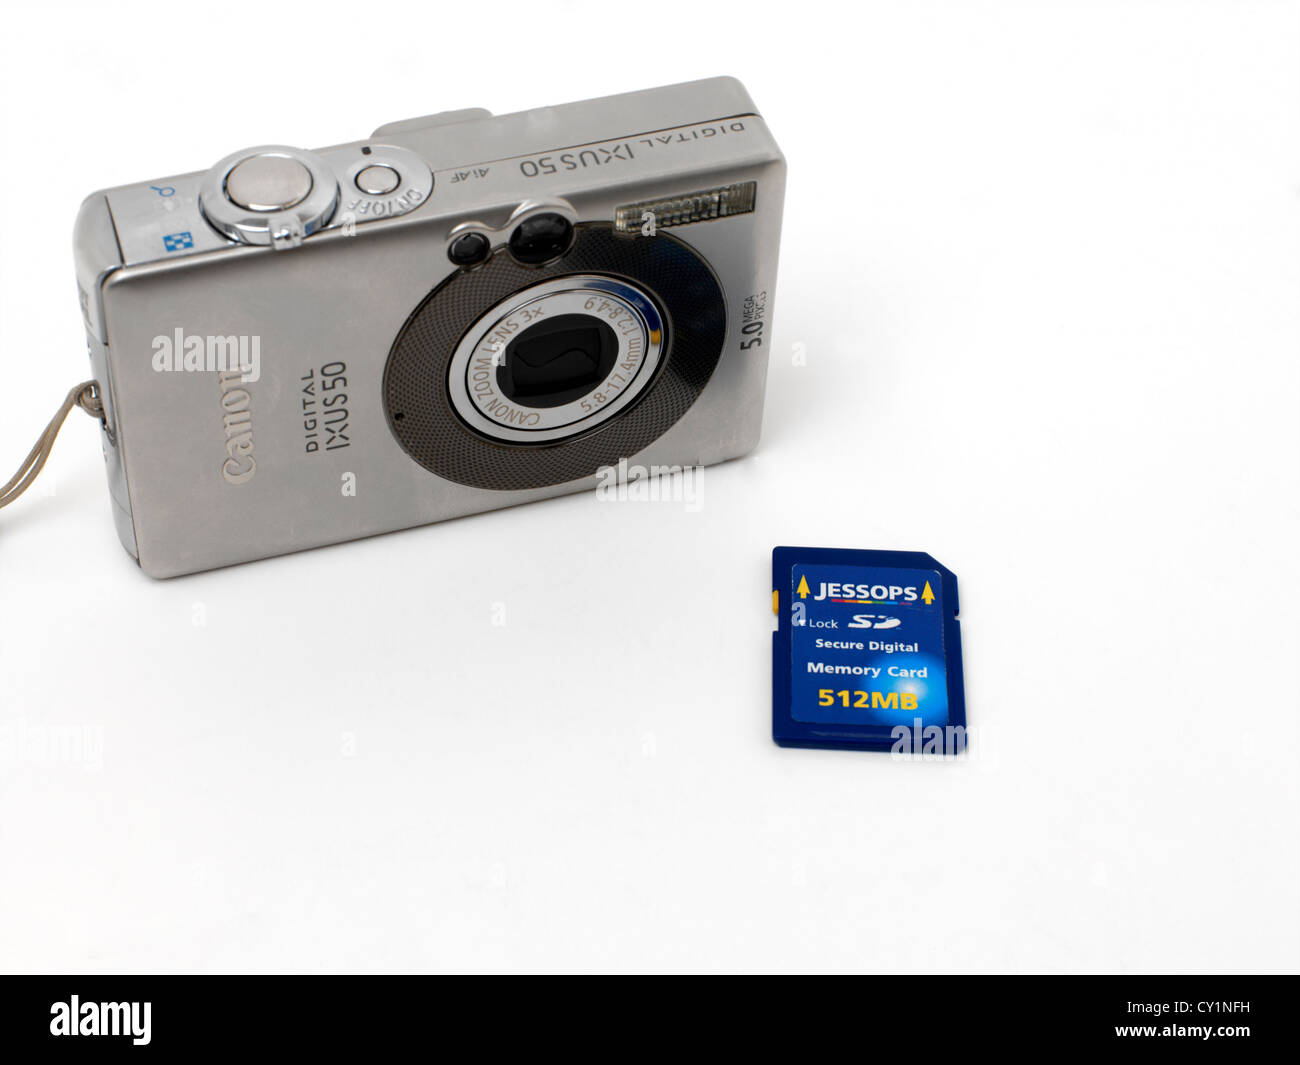 Canon Ixus 50 Digital Camera with Secure Digital Memory Card 512mb Stock  Photo - Alamy